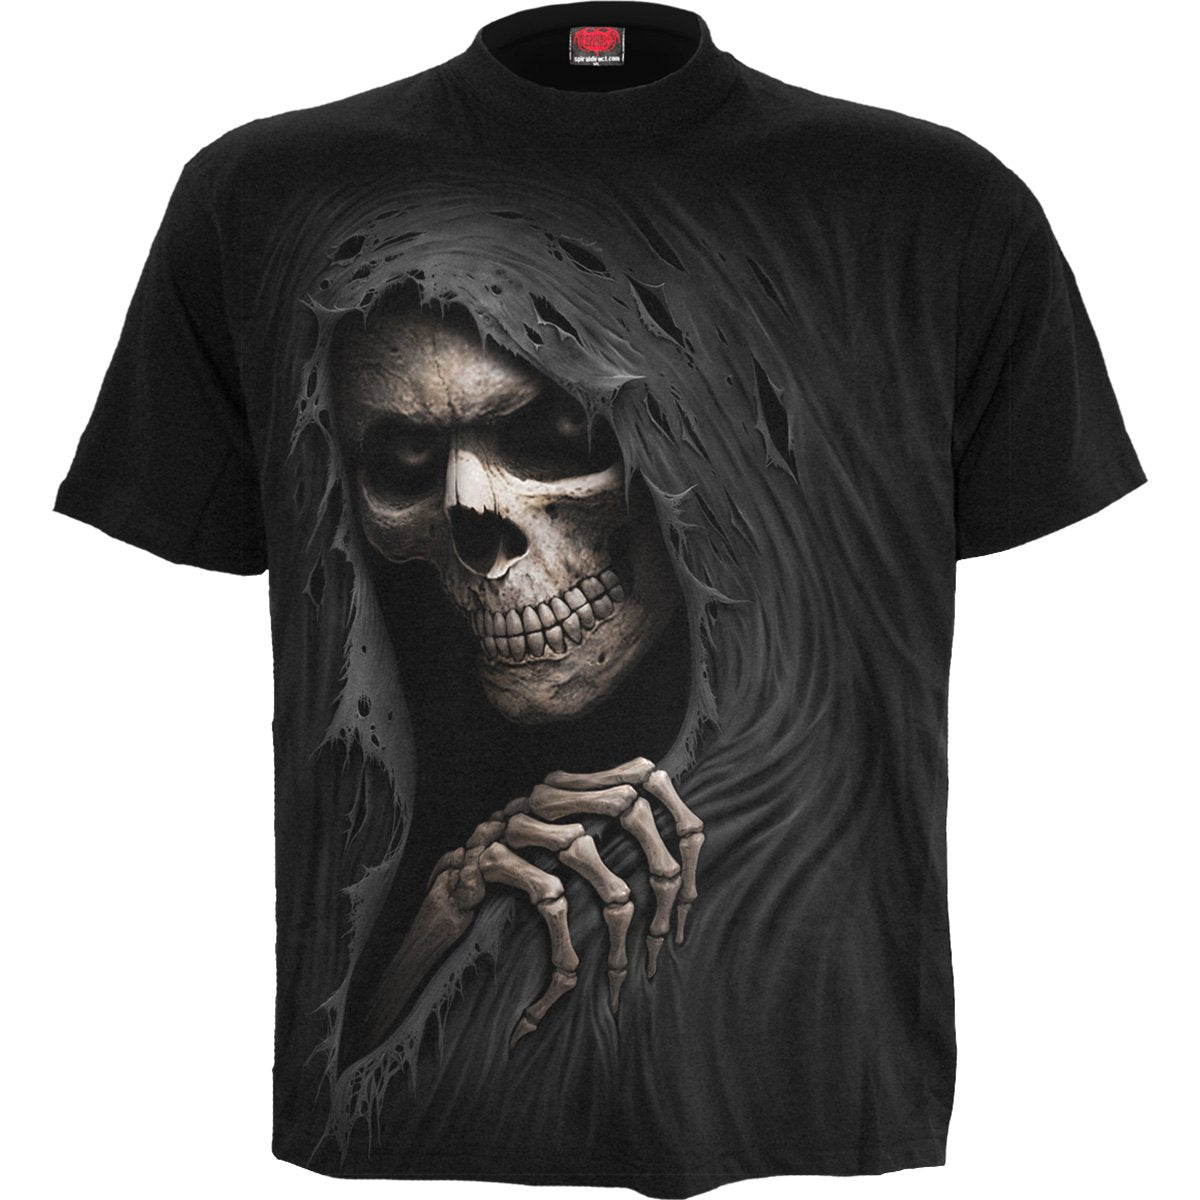 GRIM RIPPER - T-Shirt Black - Spiral USA